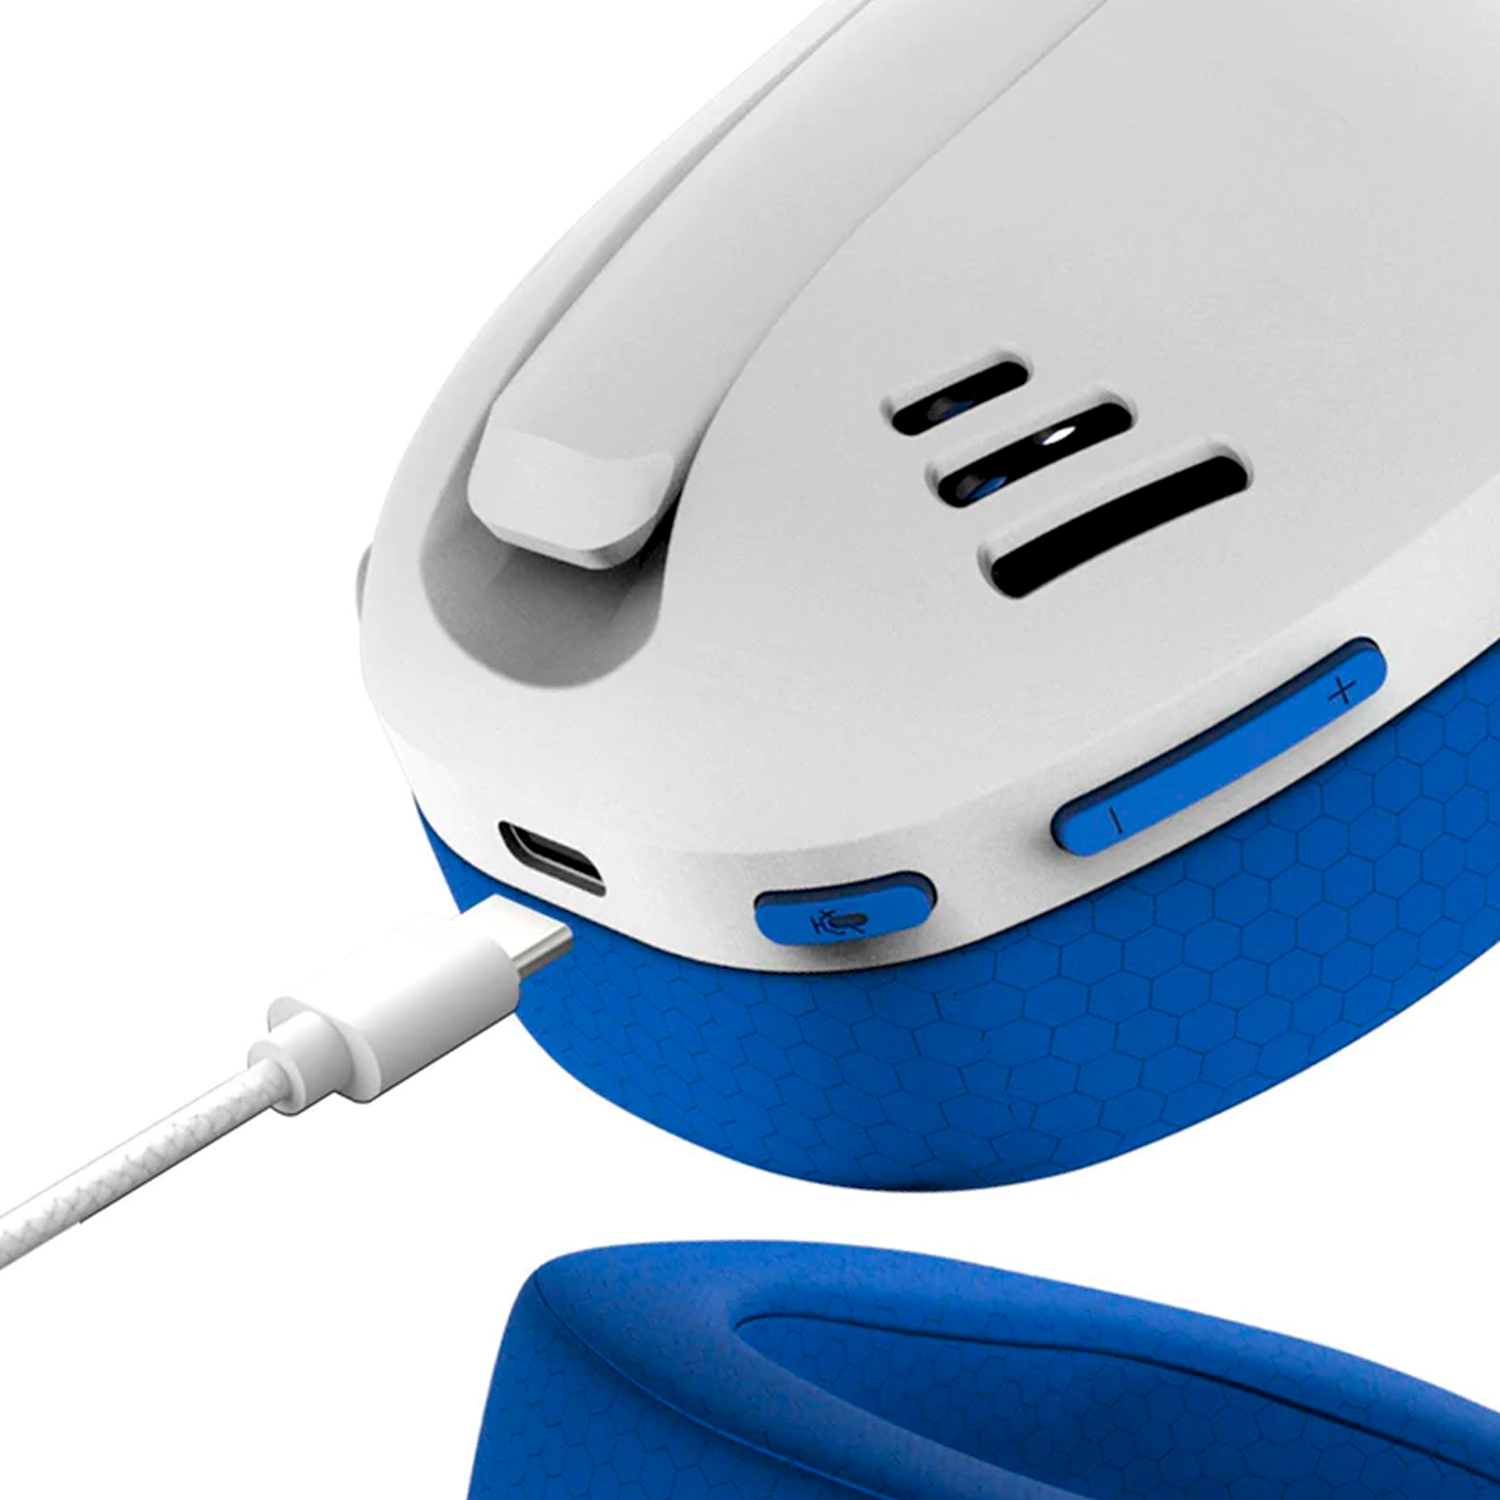 Headset Gamer Redragon Ire Pro H848 Bluetooth/Wireless - Branco e Azul